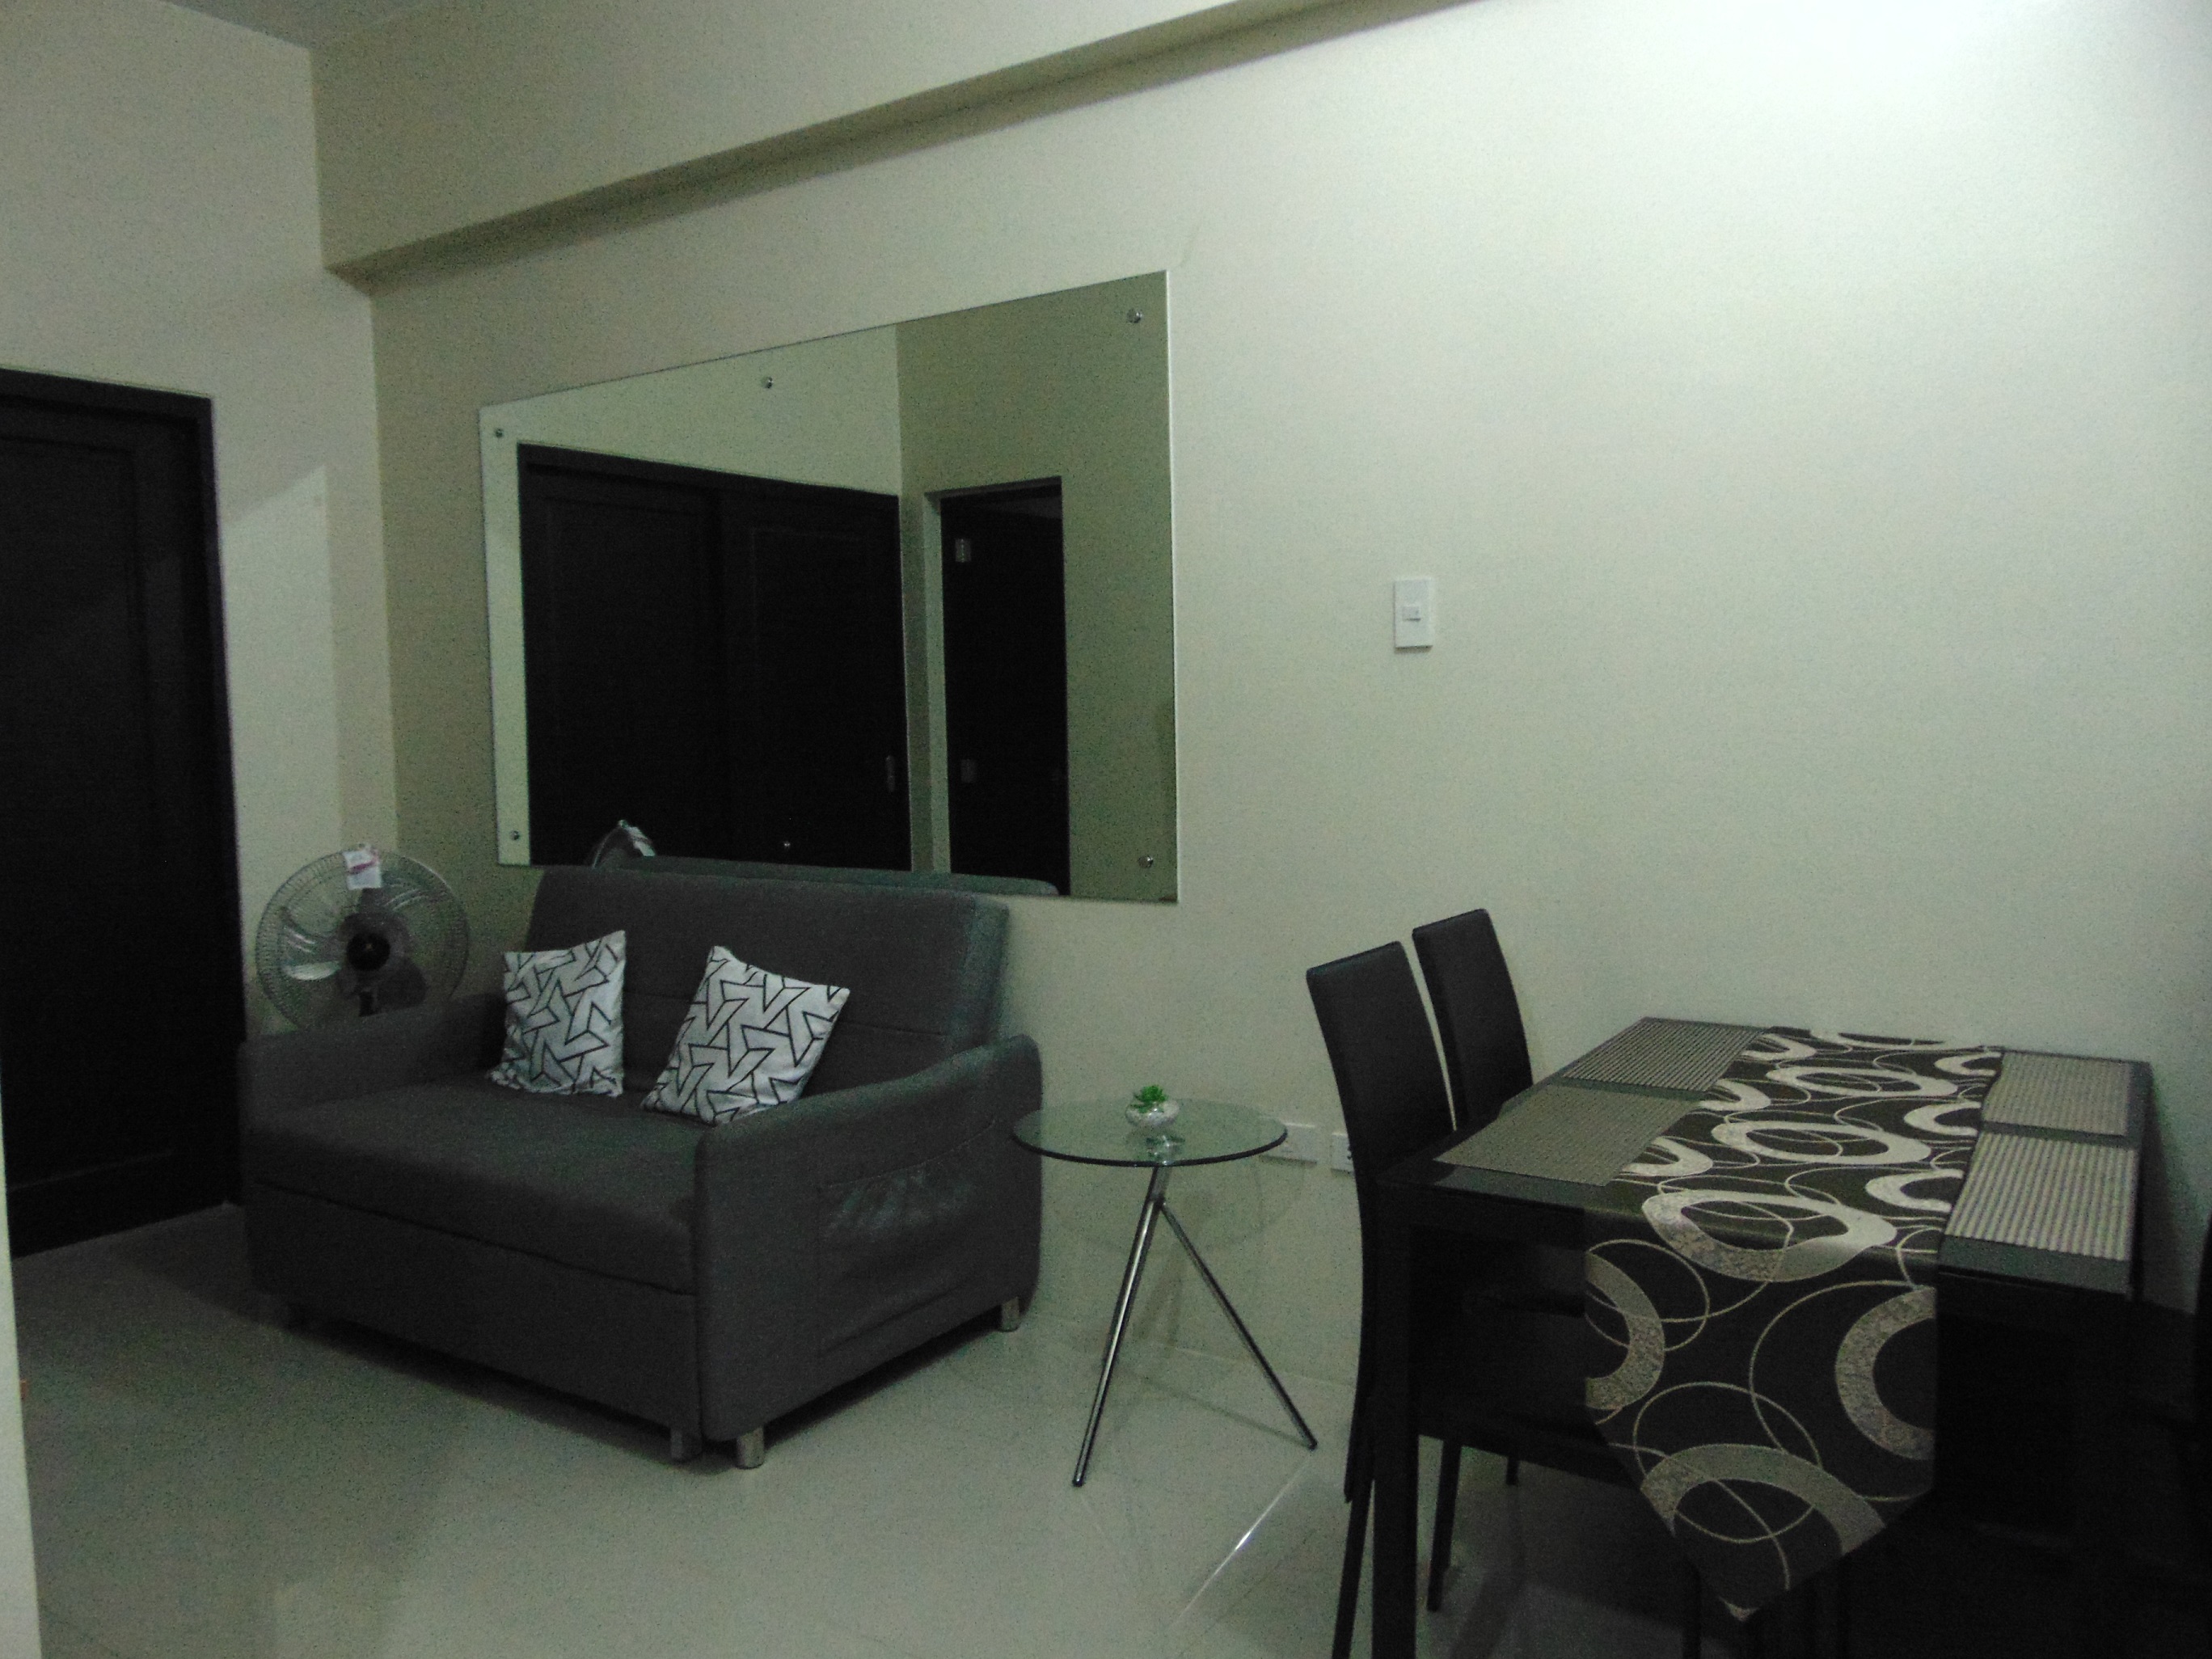 1-bedroom-condominium-in-banawa-cebu-city